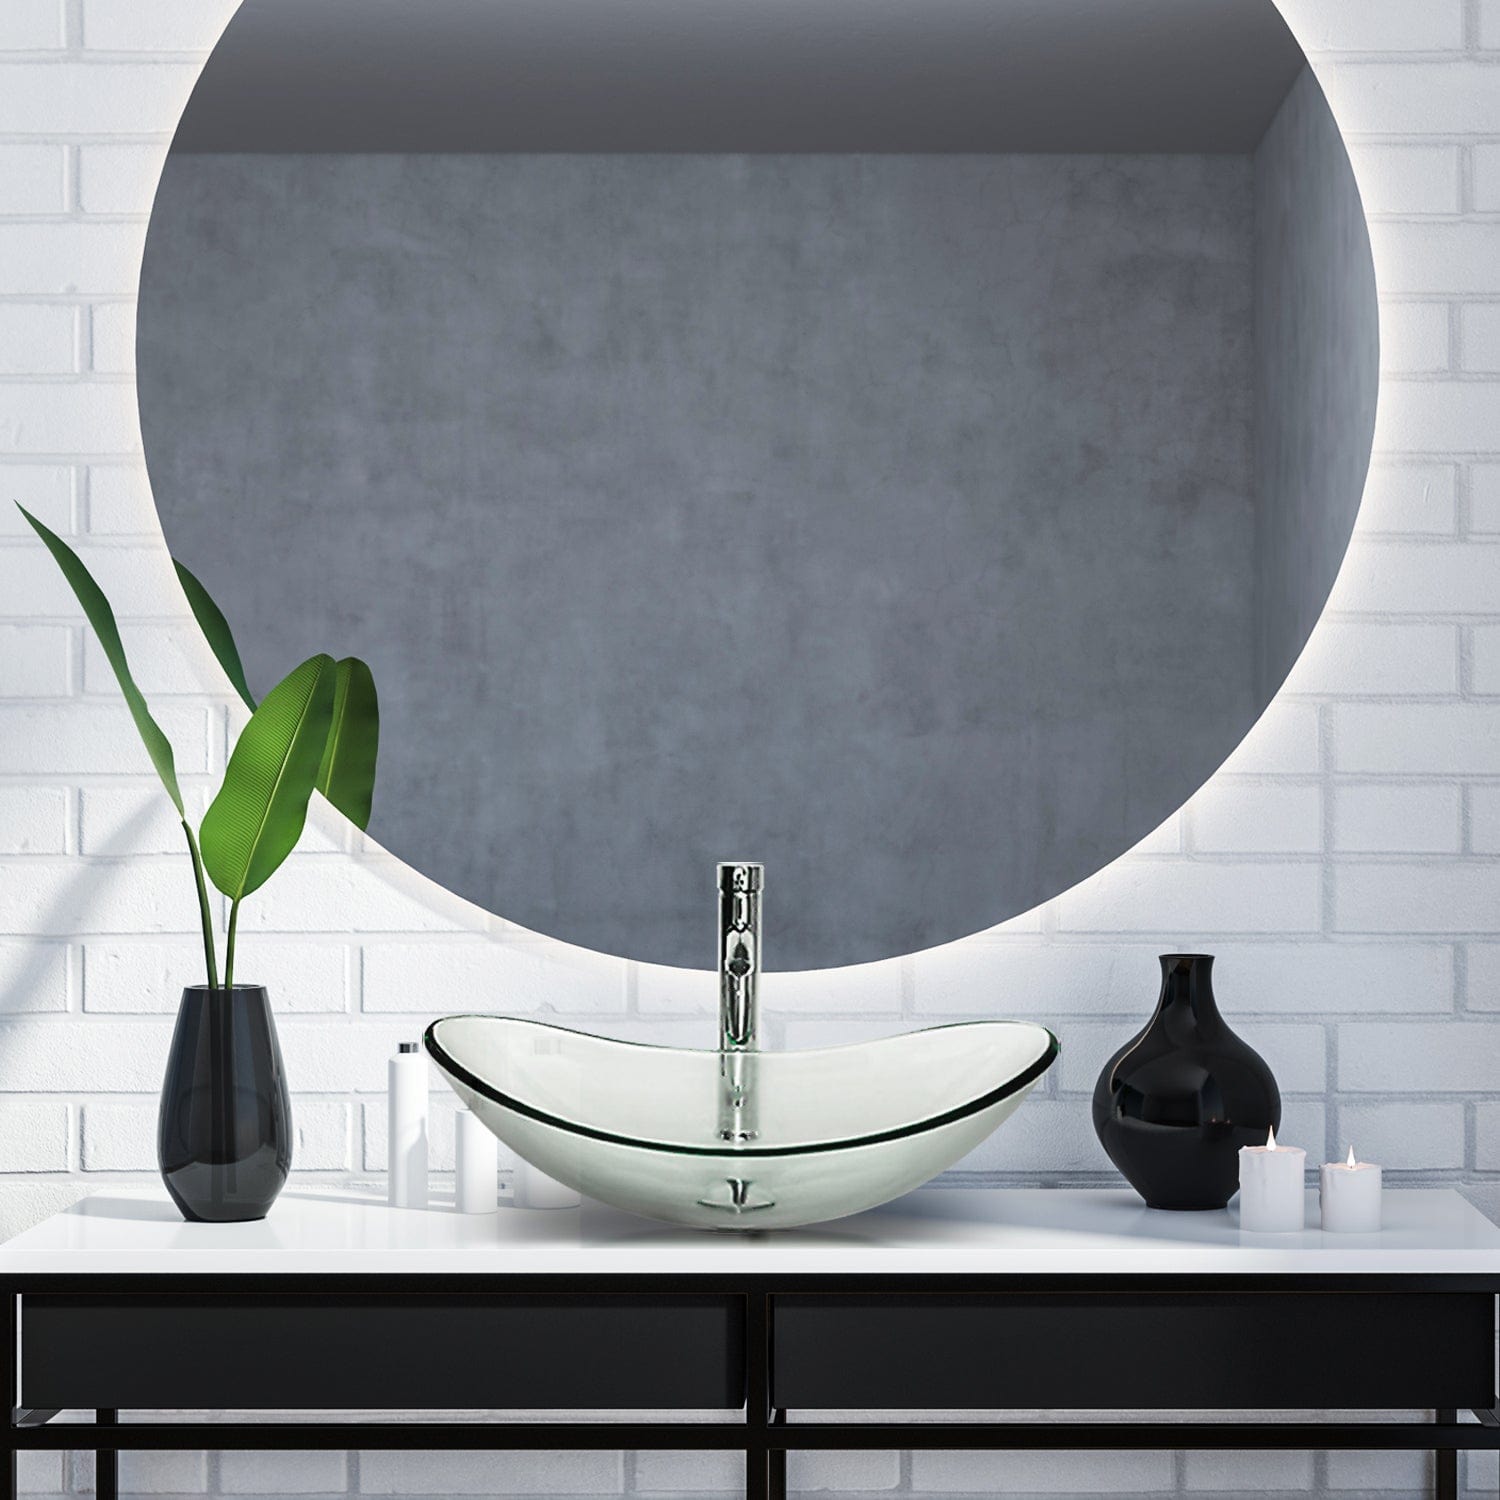 Oval Glass Vessel Sink BG007 display in bathroom